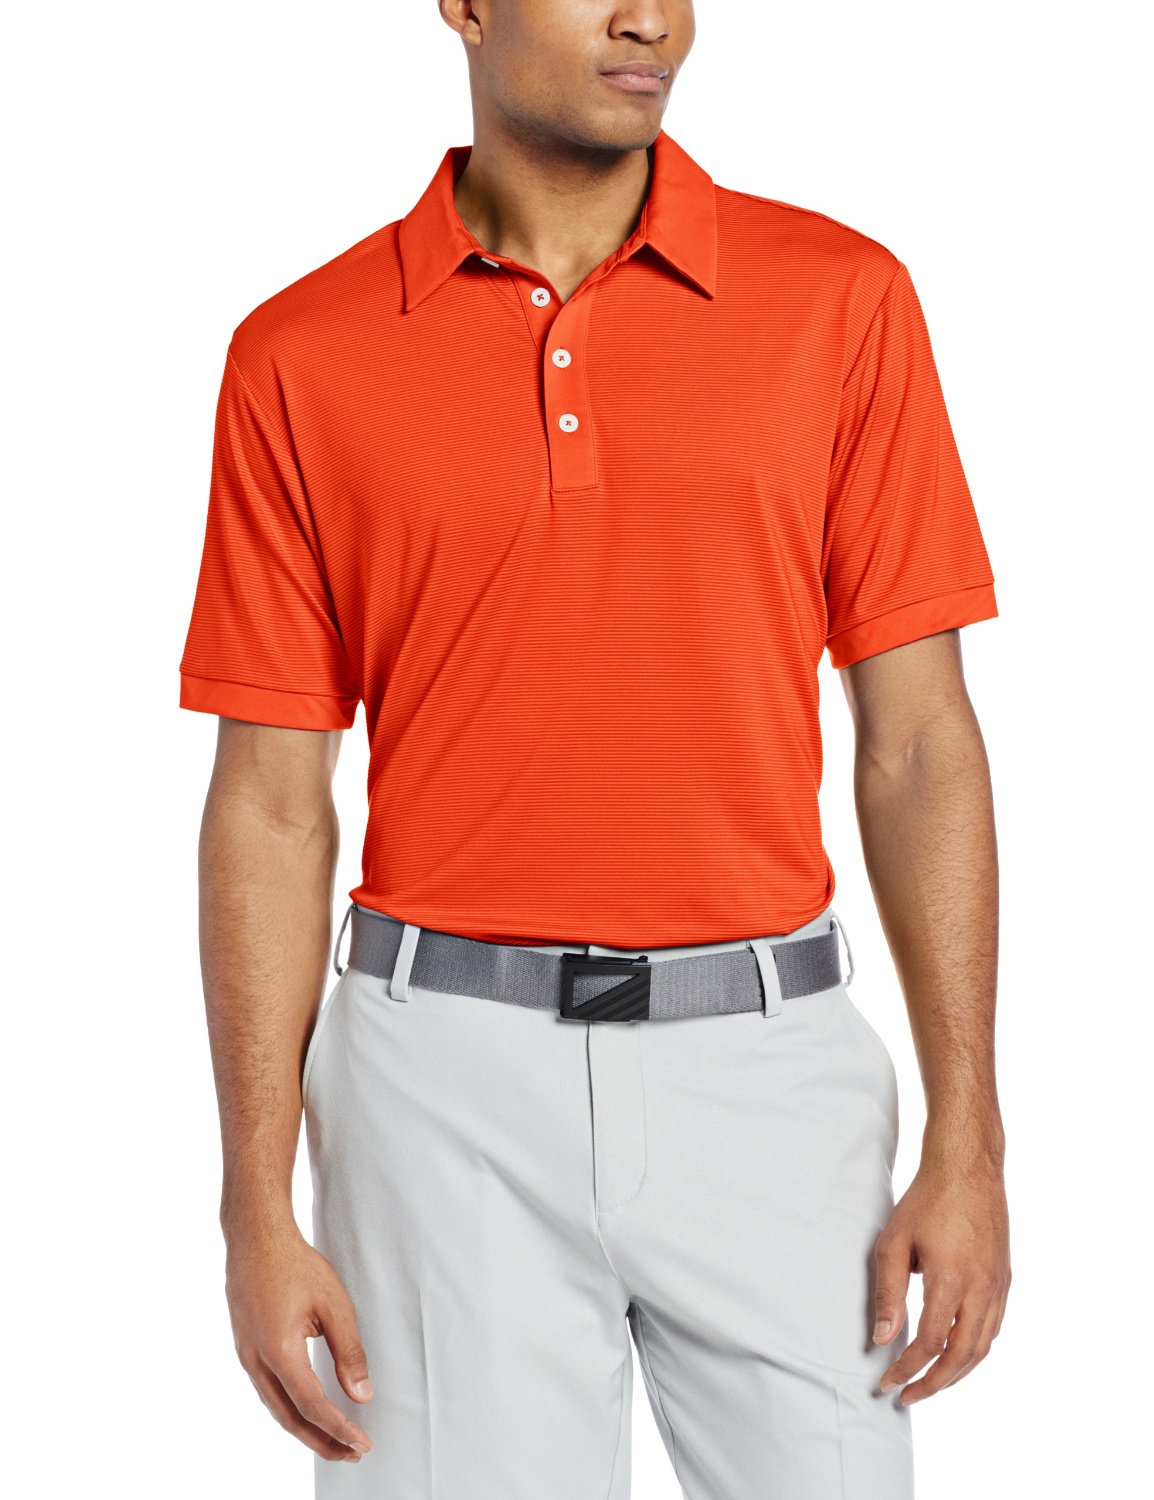 Mens Adidas Climalite Microstripe Golf Polo Shirts